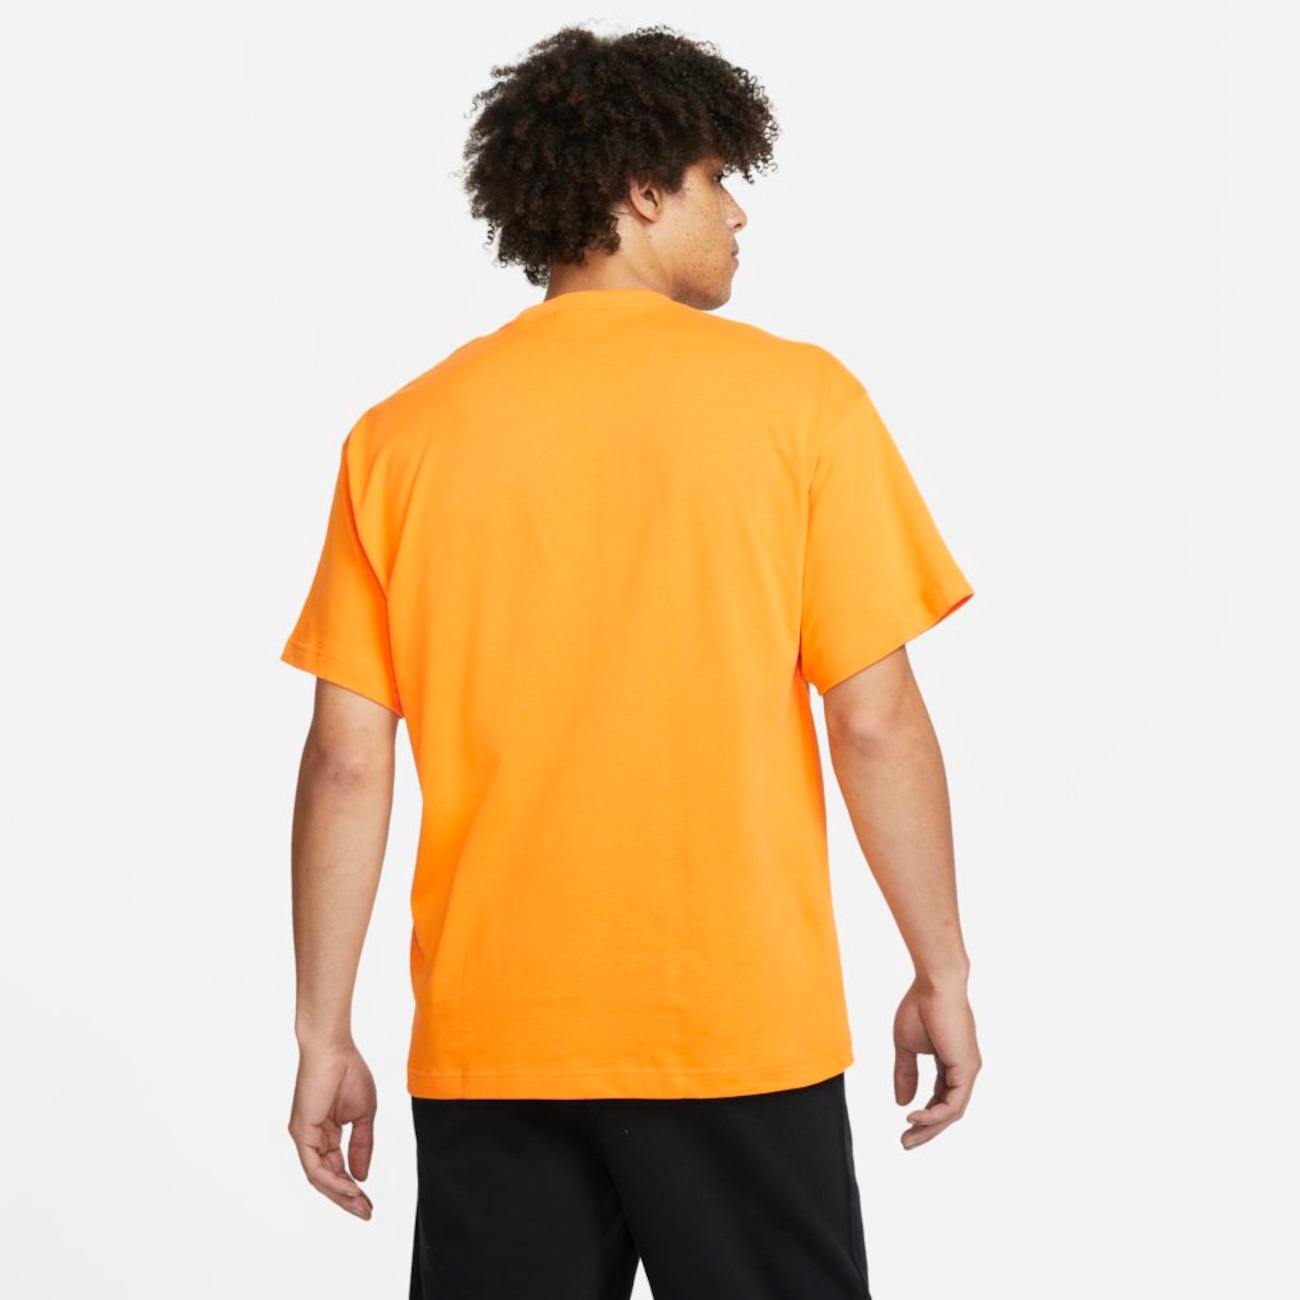 Camiseta NikeLab Masculina - Foto 2